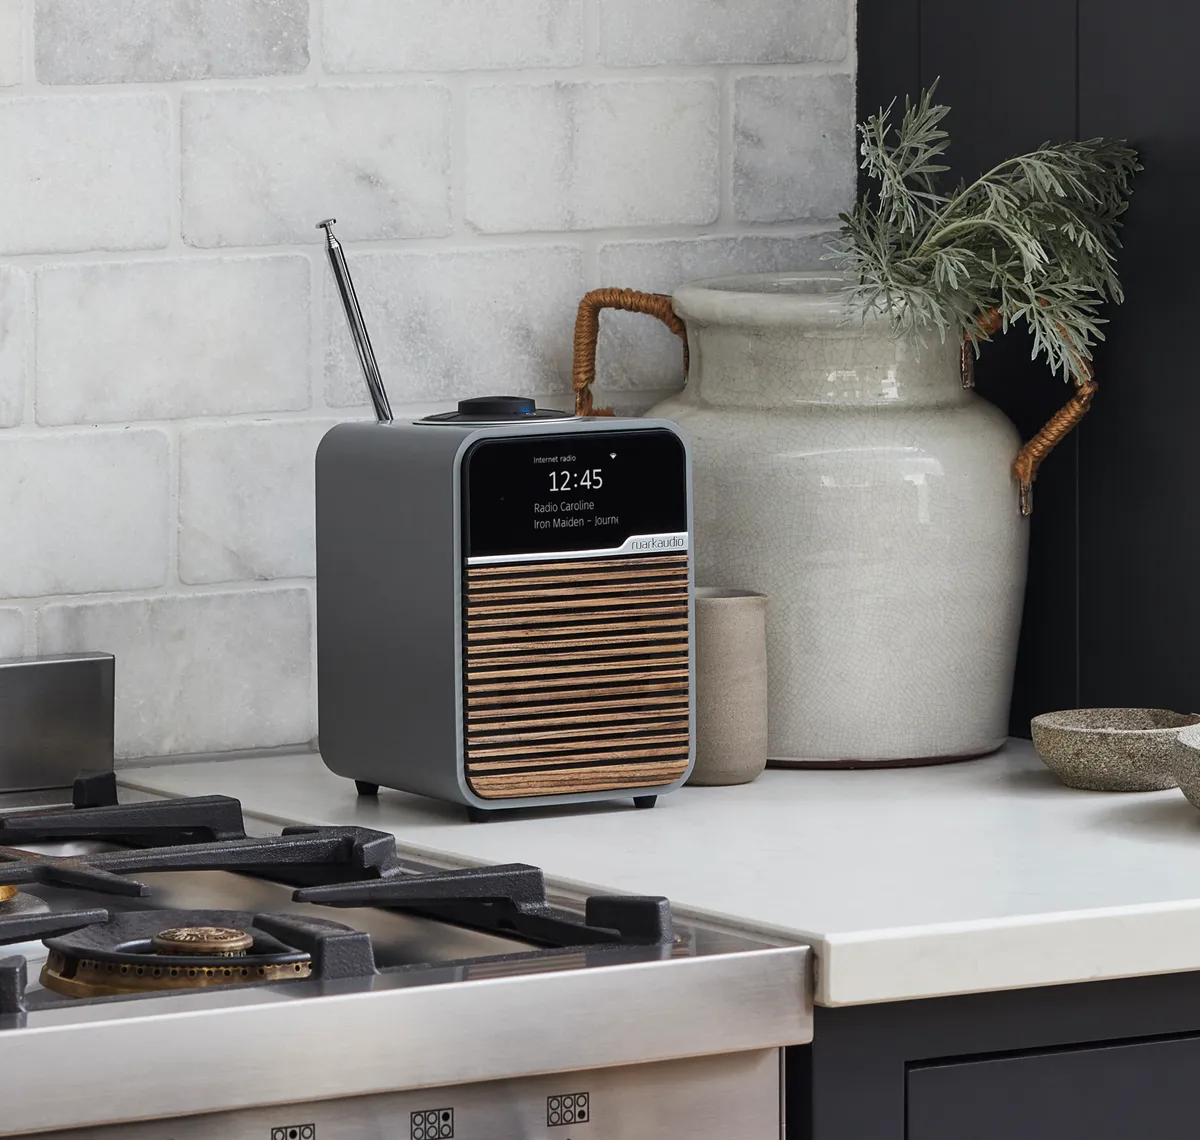 A photo of the Ruark R1S kitchen radio on the kitchen worktop